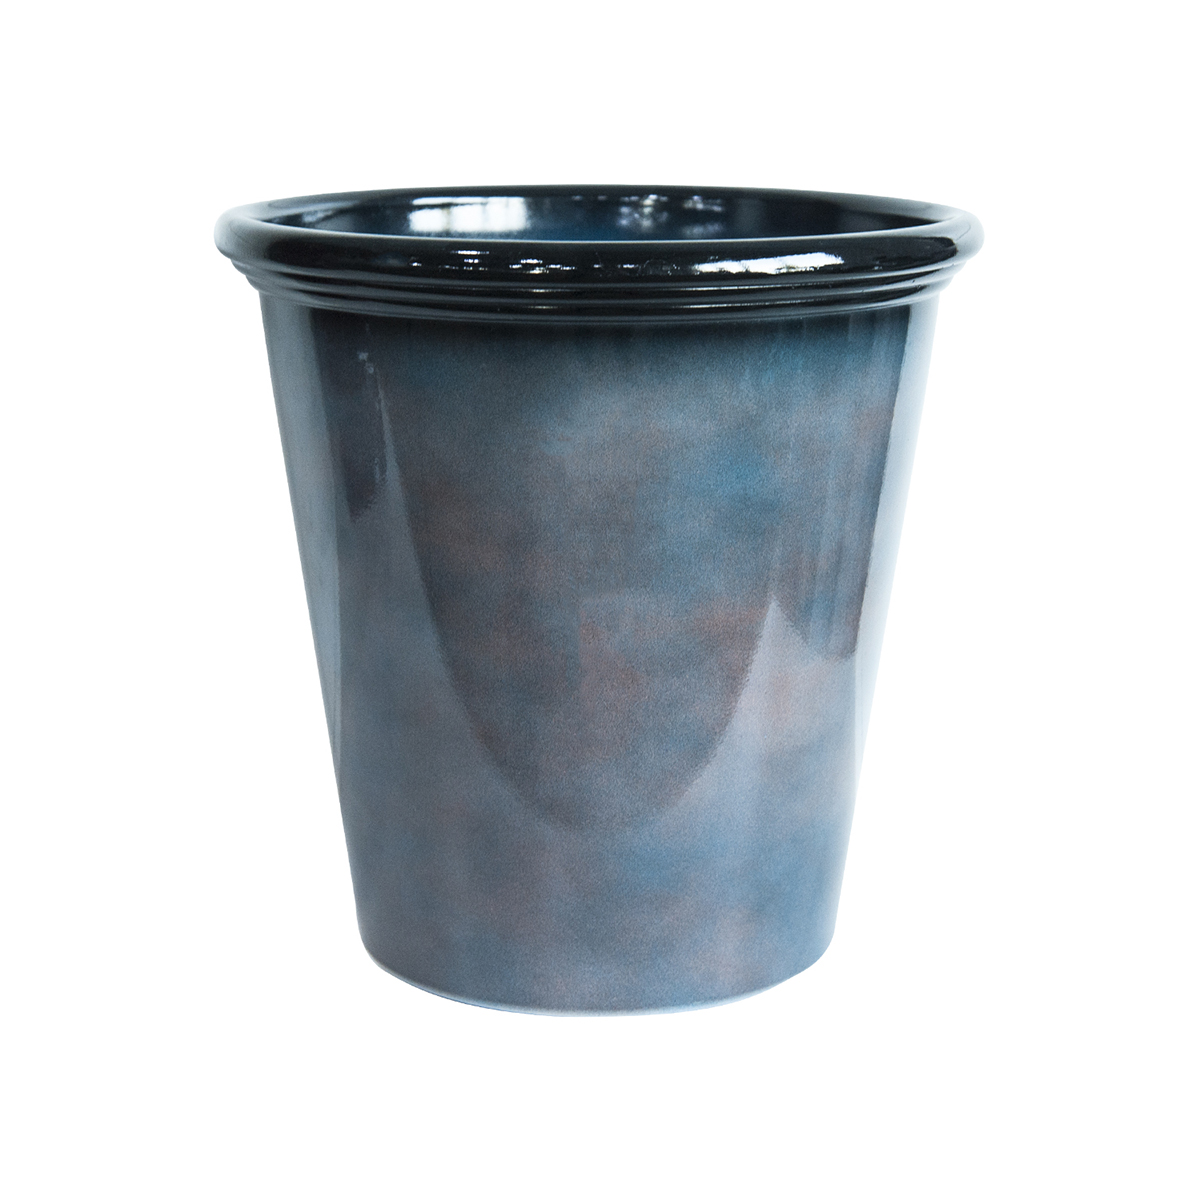 Ceramic Glazed Effect Bucket Plastic Planter Pots